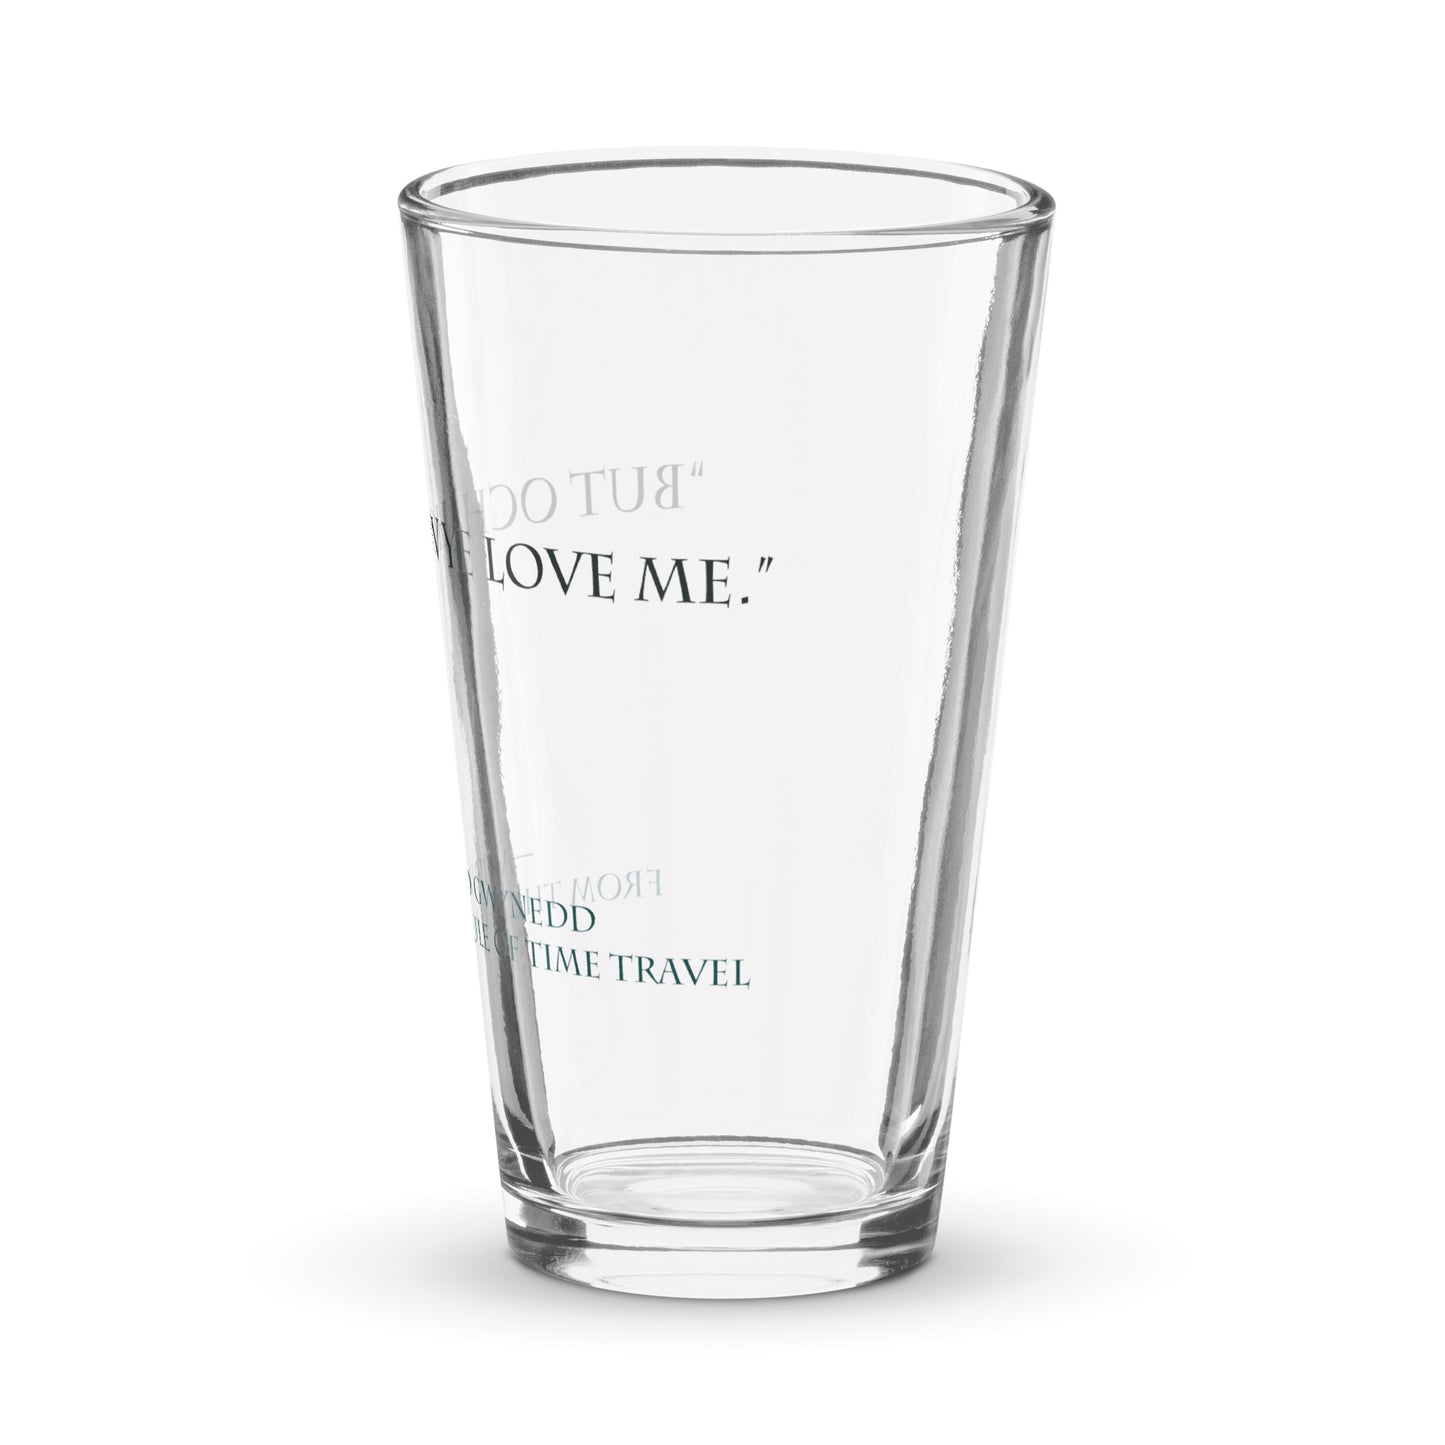 "But och, how ye love me" on pint glass